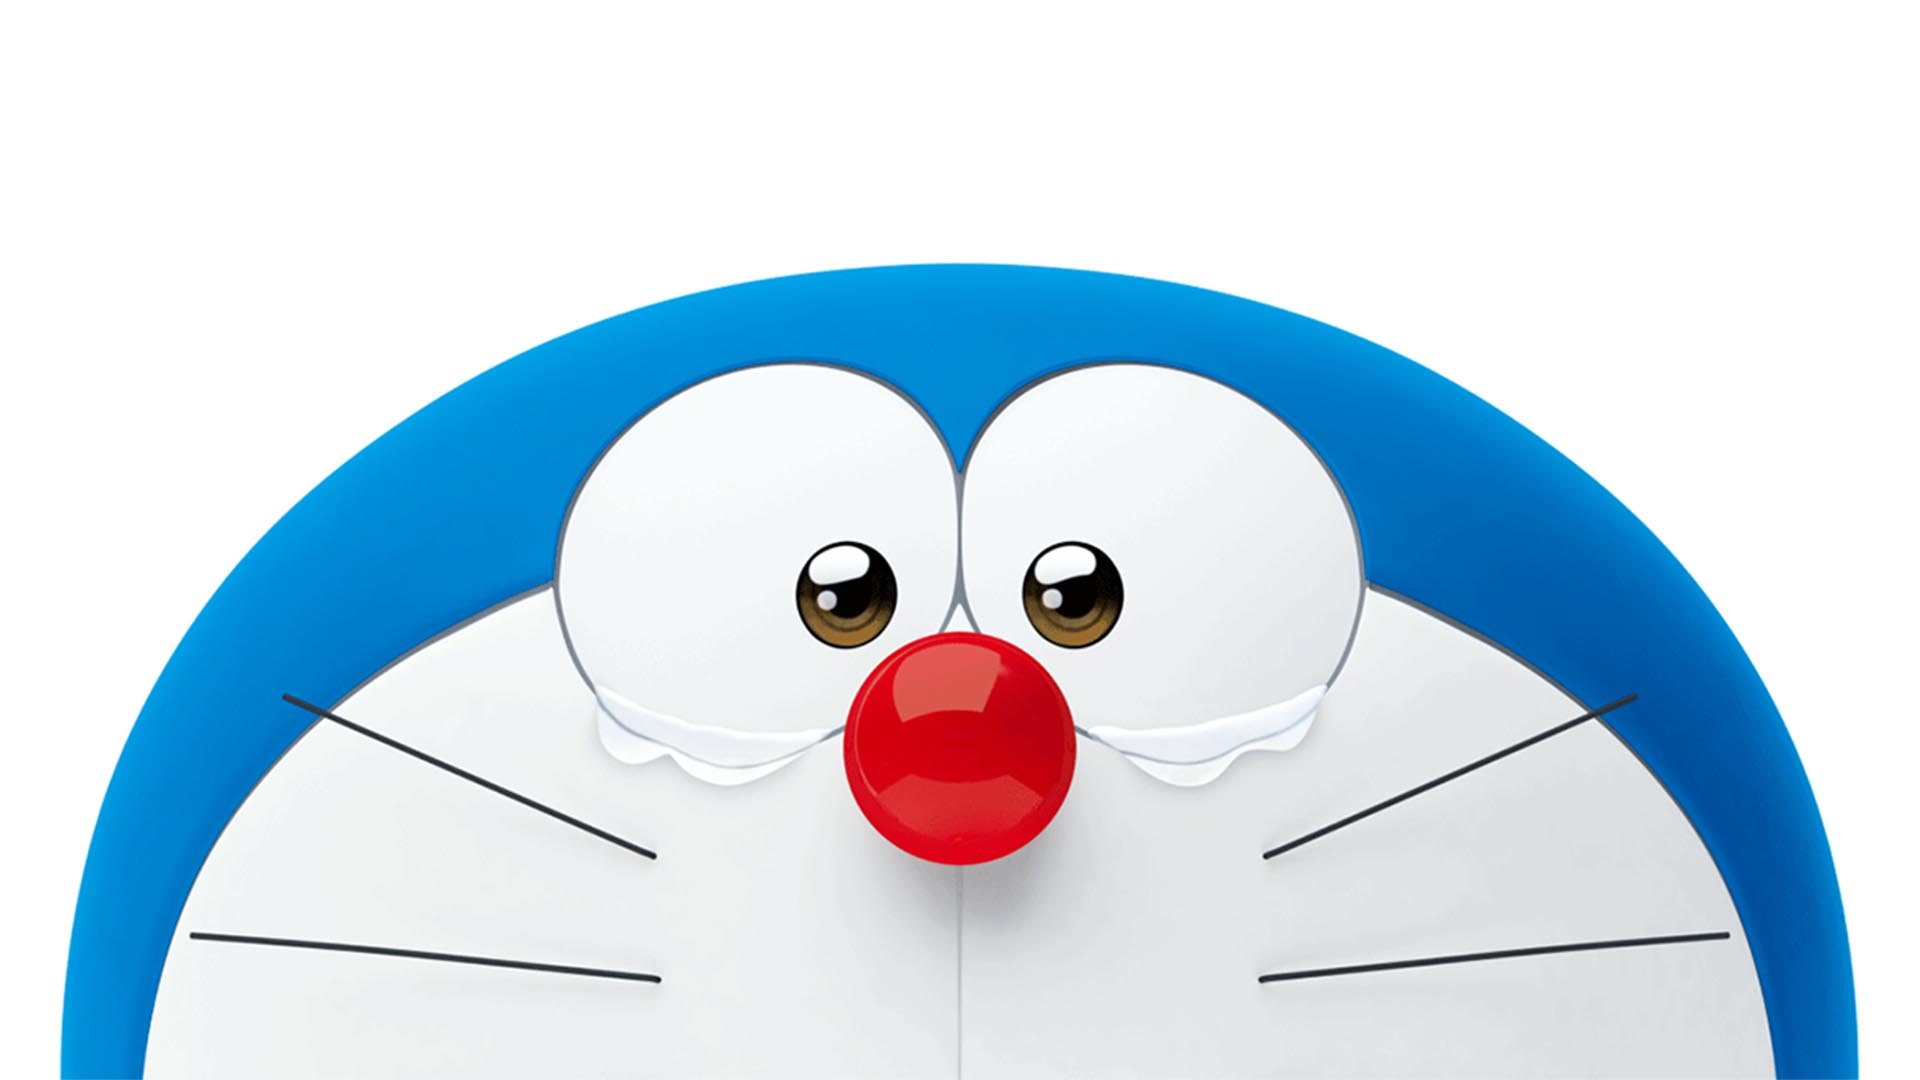 Free Download Doraemon Backgrounds | PixelsTalk.Net